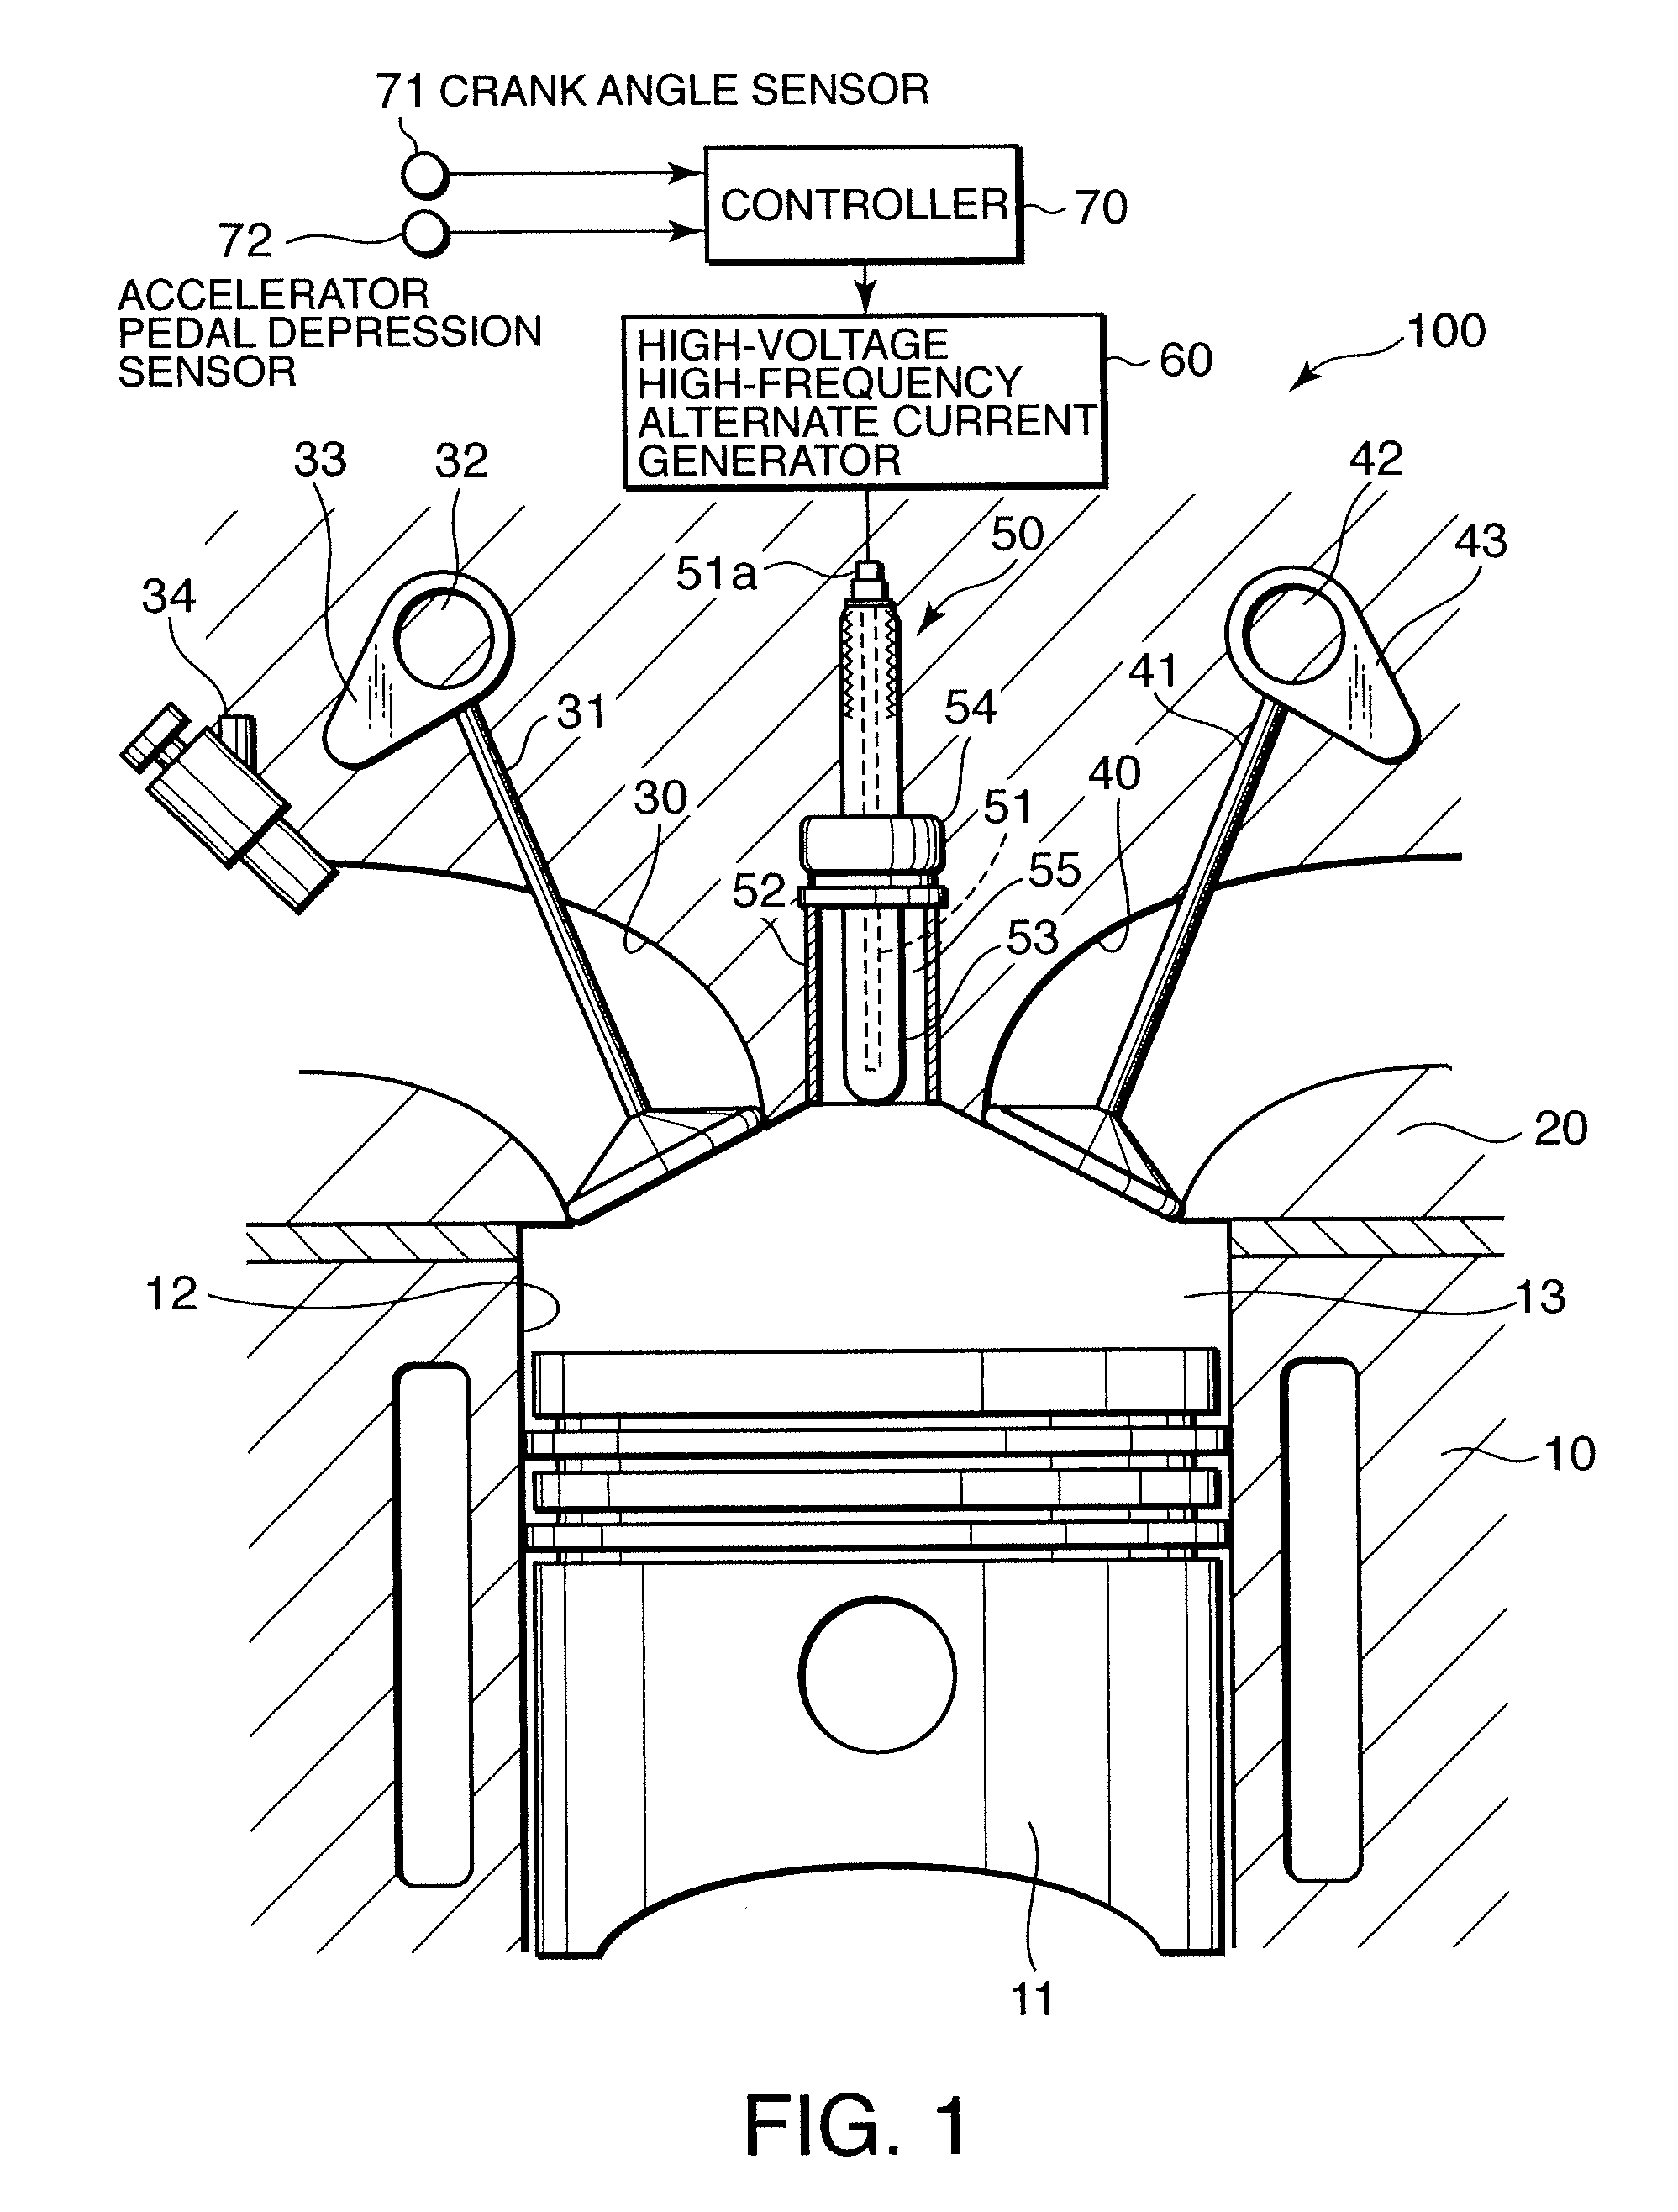 Non-equilibrium plasma discharge type ignition device